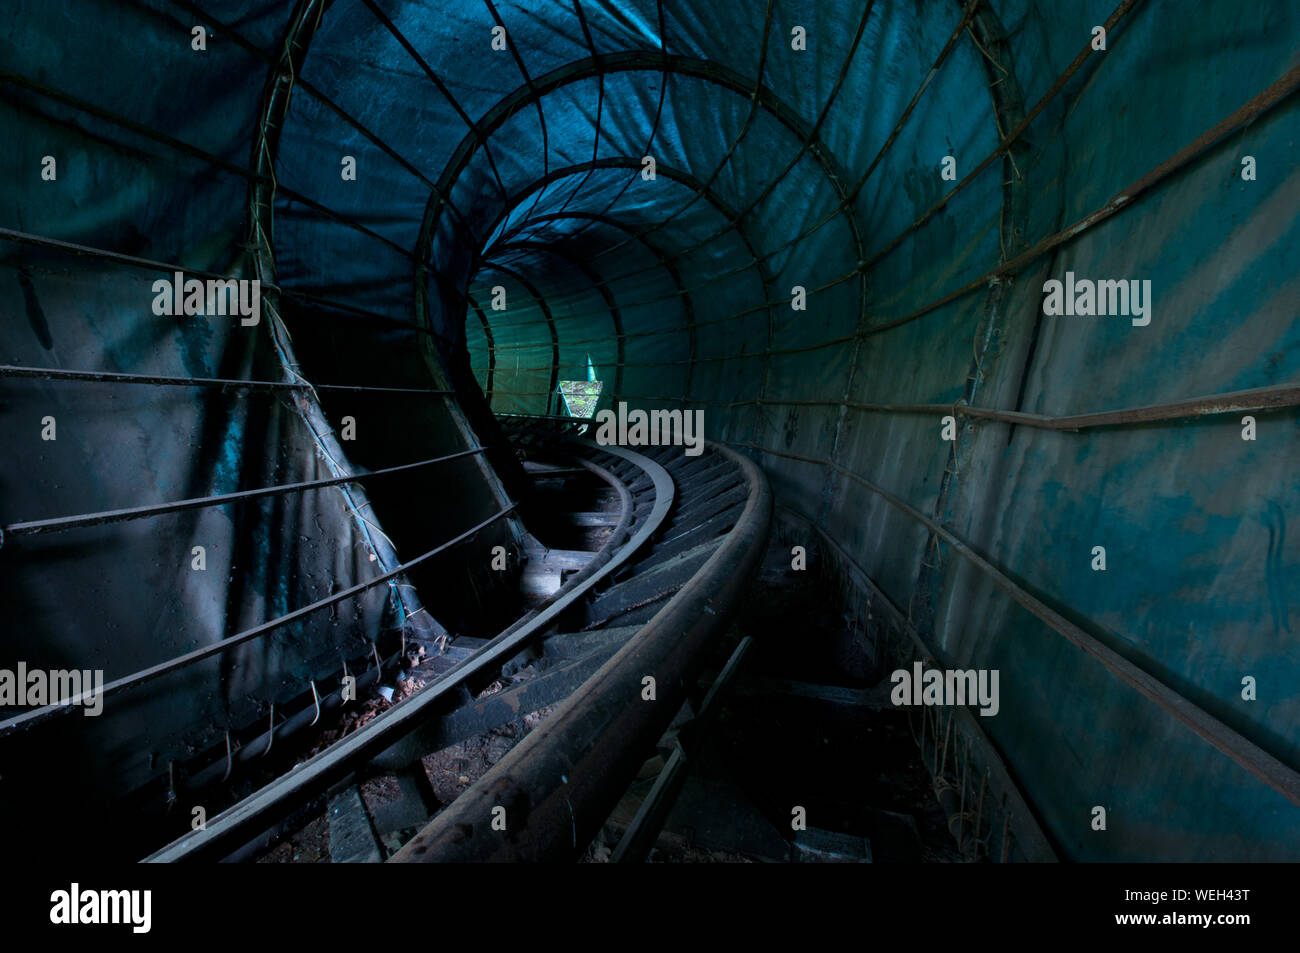 Railroad Tracks In Illuminated Tunnel Stock Photo